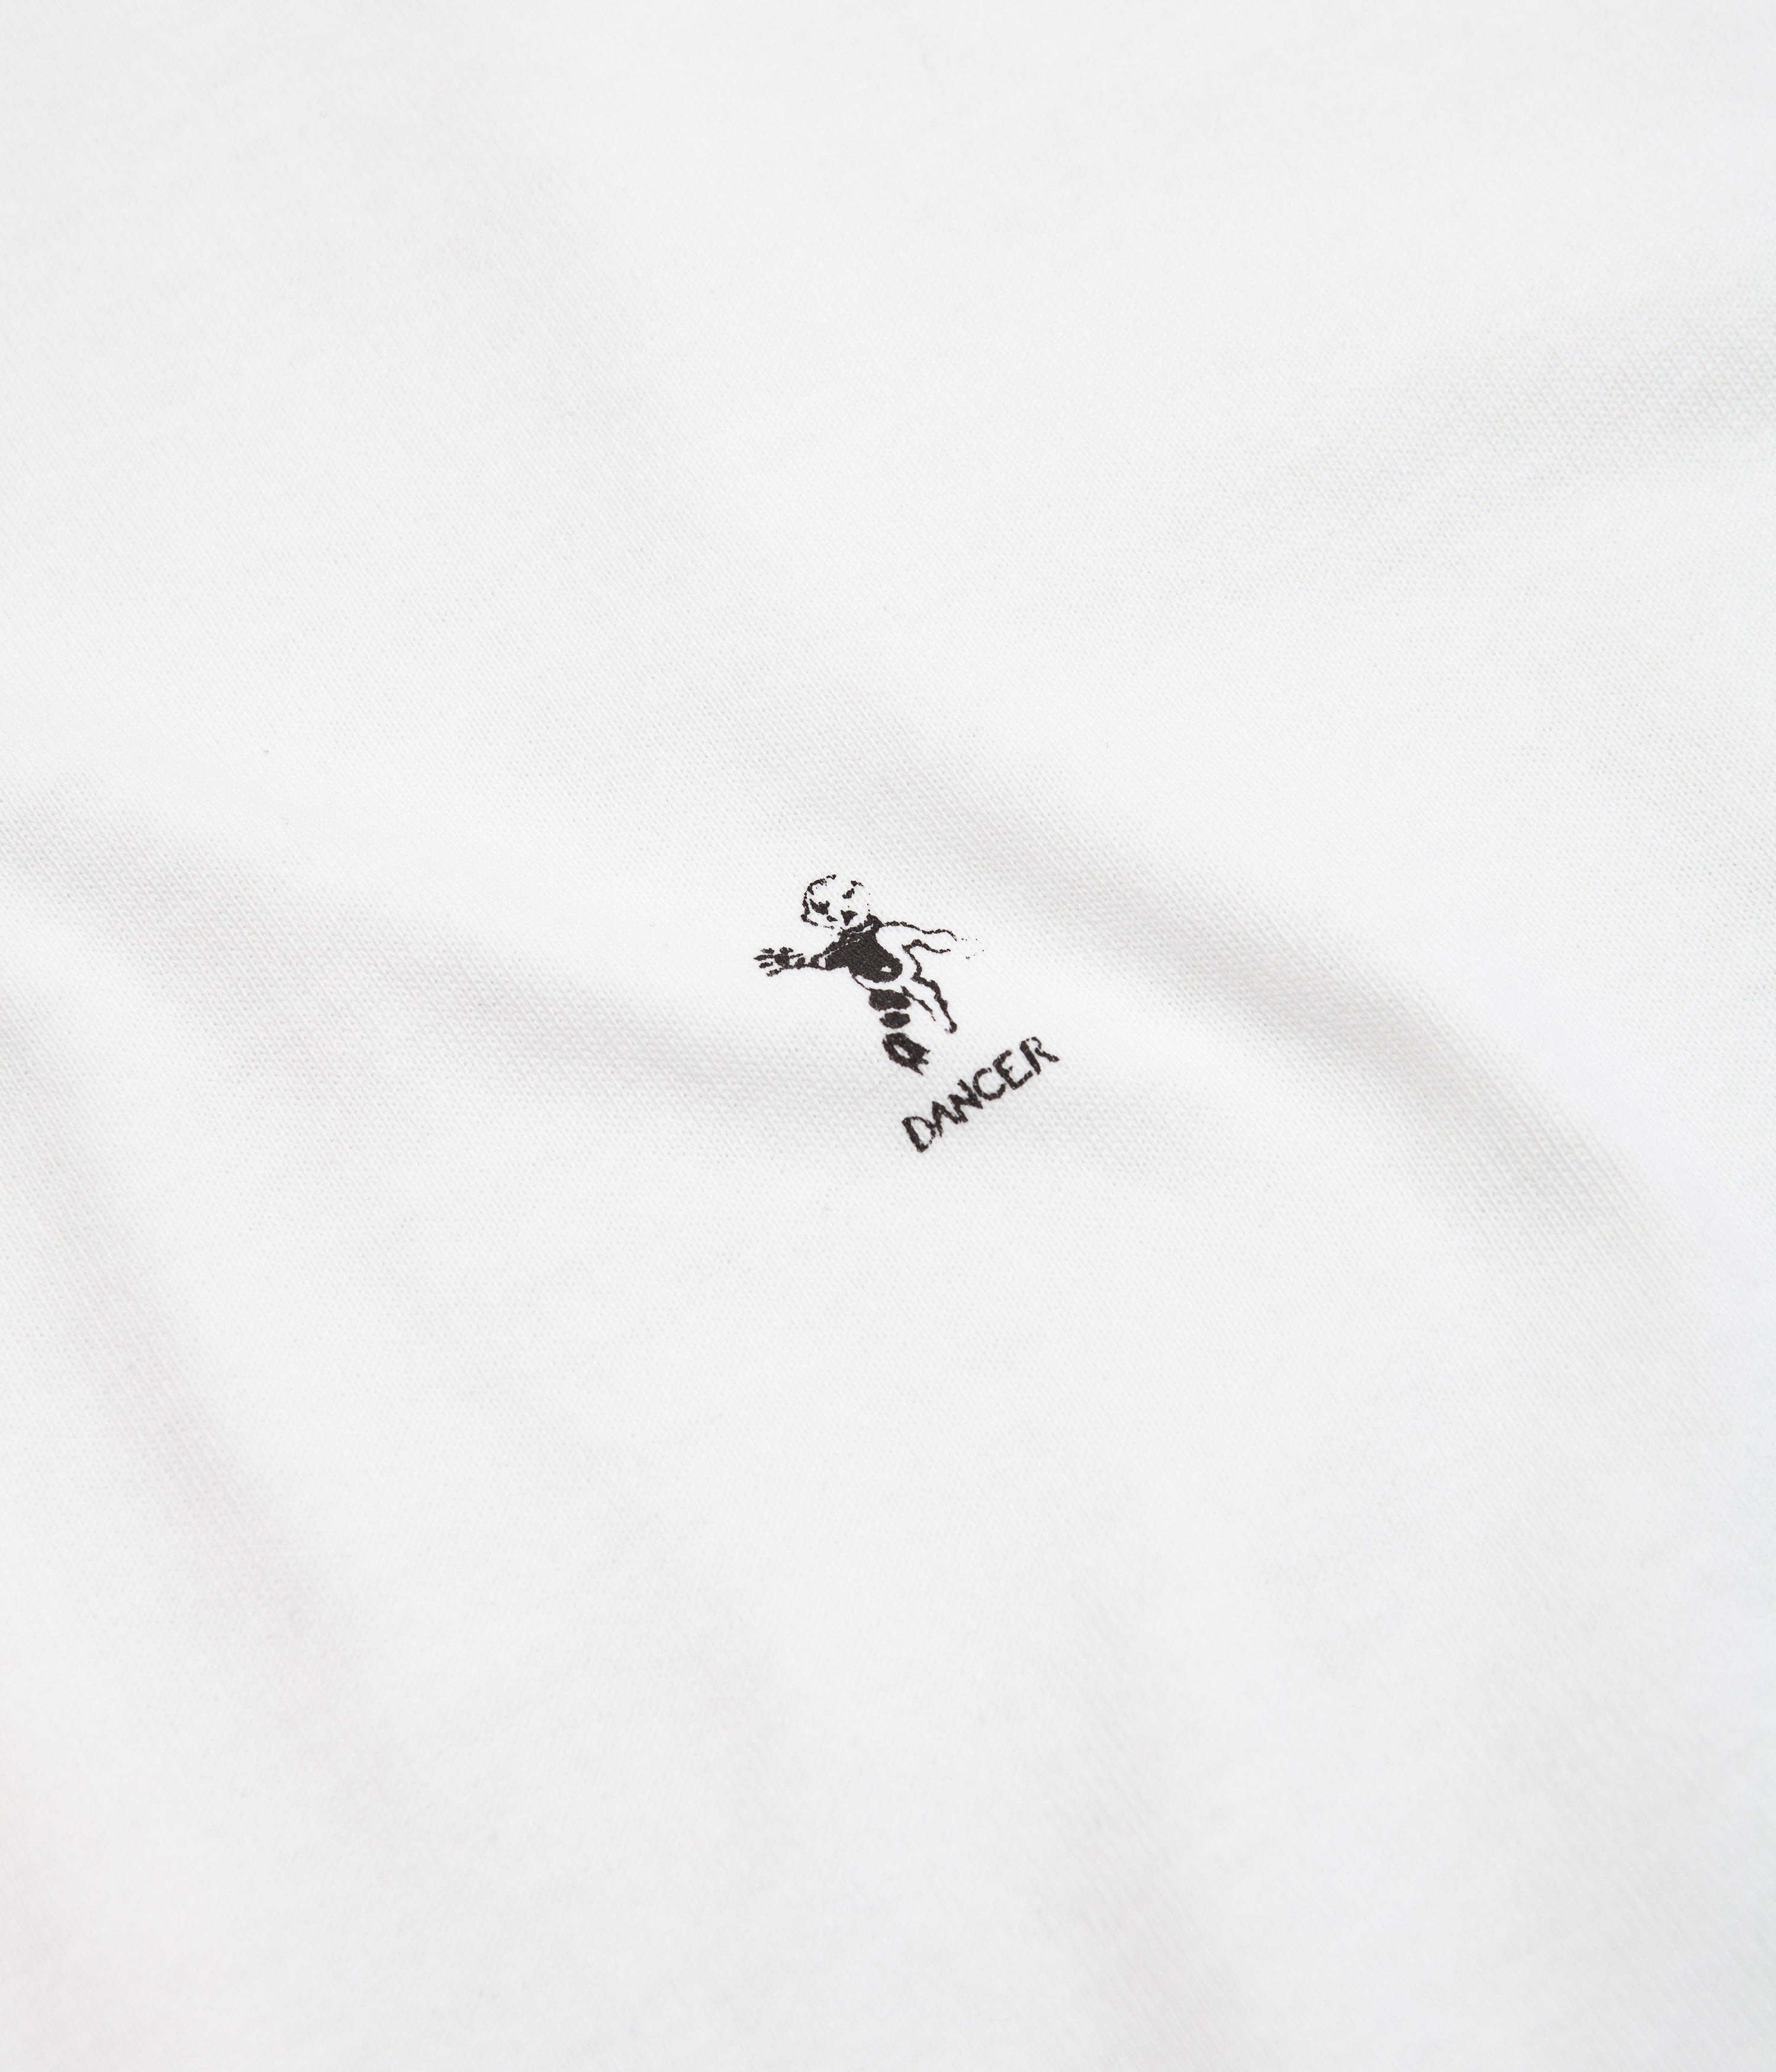 Dancer Blank Long Sleeve T-Shirt - White | Flatspot